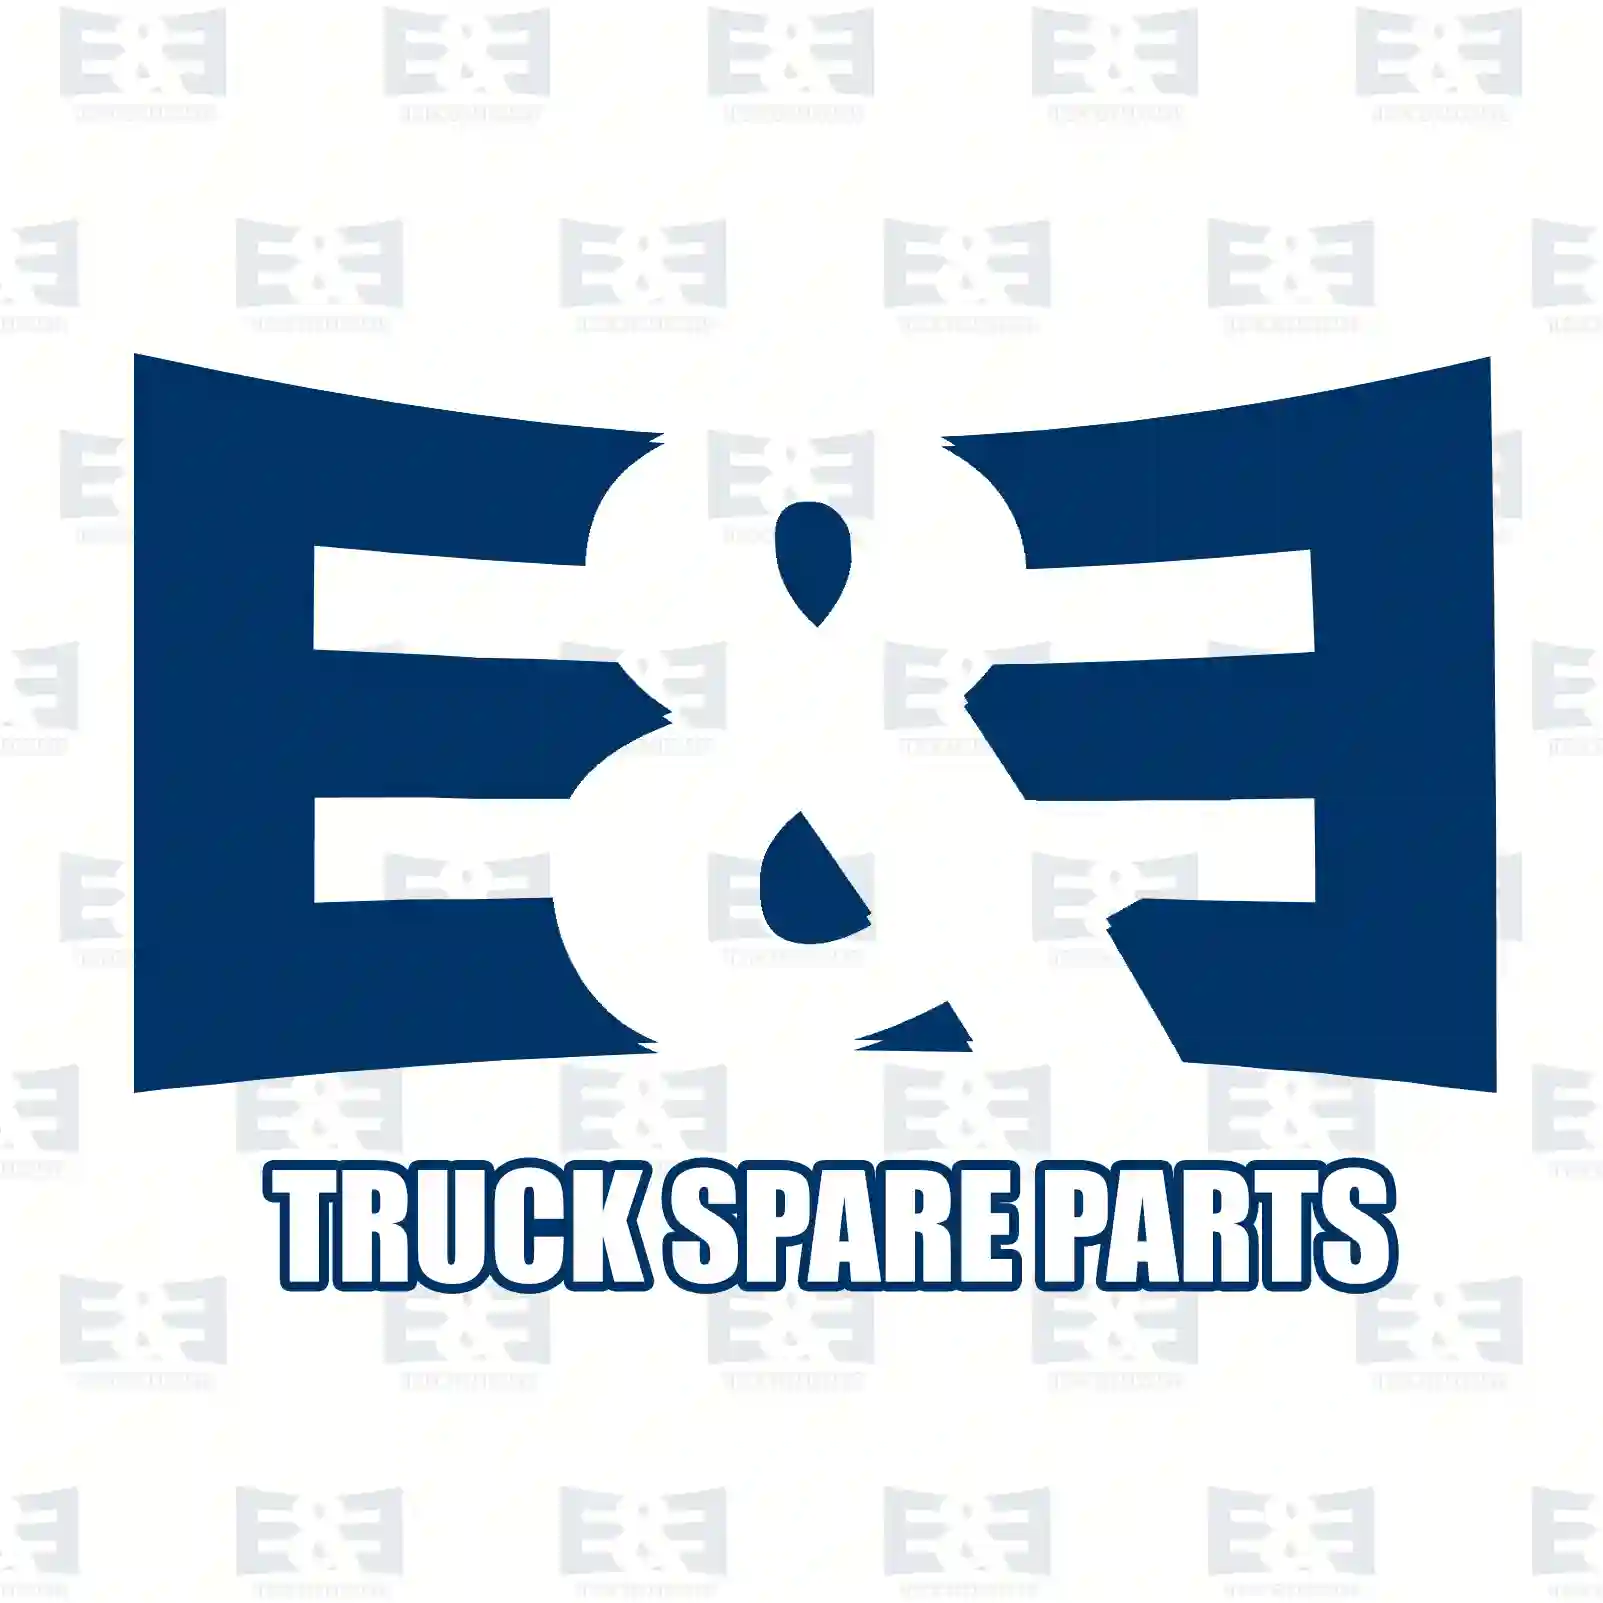 Screw with nut, 2E2285748, 0009903077S, SCREWANDNUT, ||  2E2285748 E&E Truck Spare Parts | Truck Spare Parts, Auotomotive Spare Parts Screw with nut, 2E2285748, 0009903077S, SCREWANDNUT, ||  2E2285748 E&E Truck Spare Parts | Truck Spare Parts, Auotomotive Spare Parts